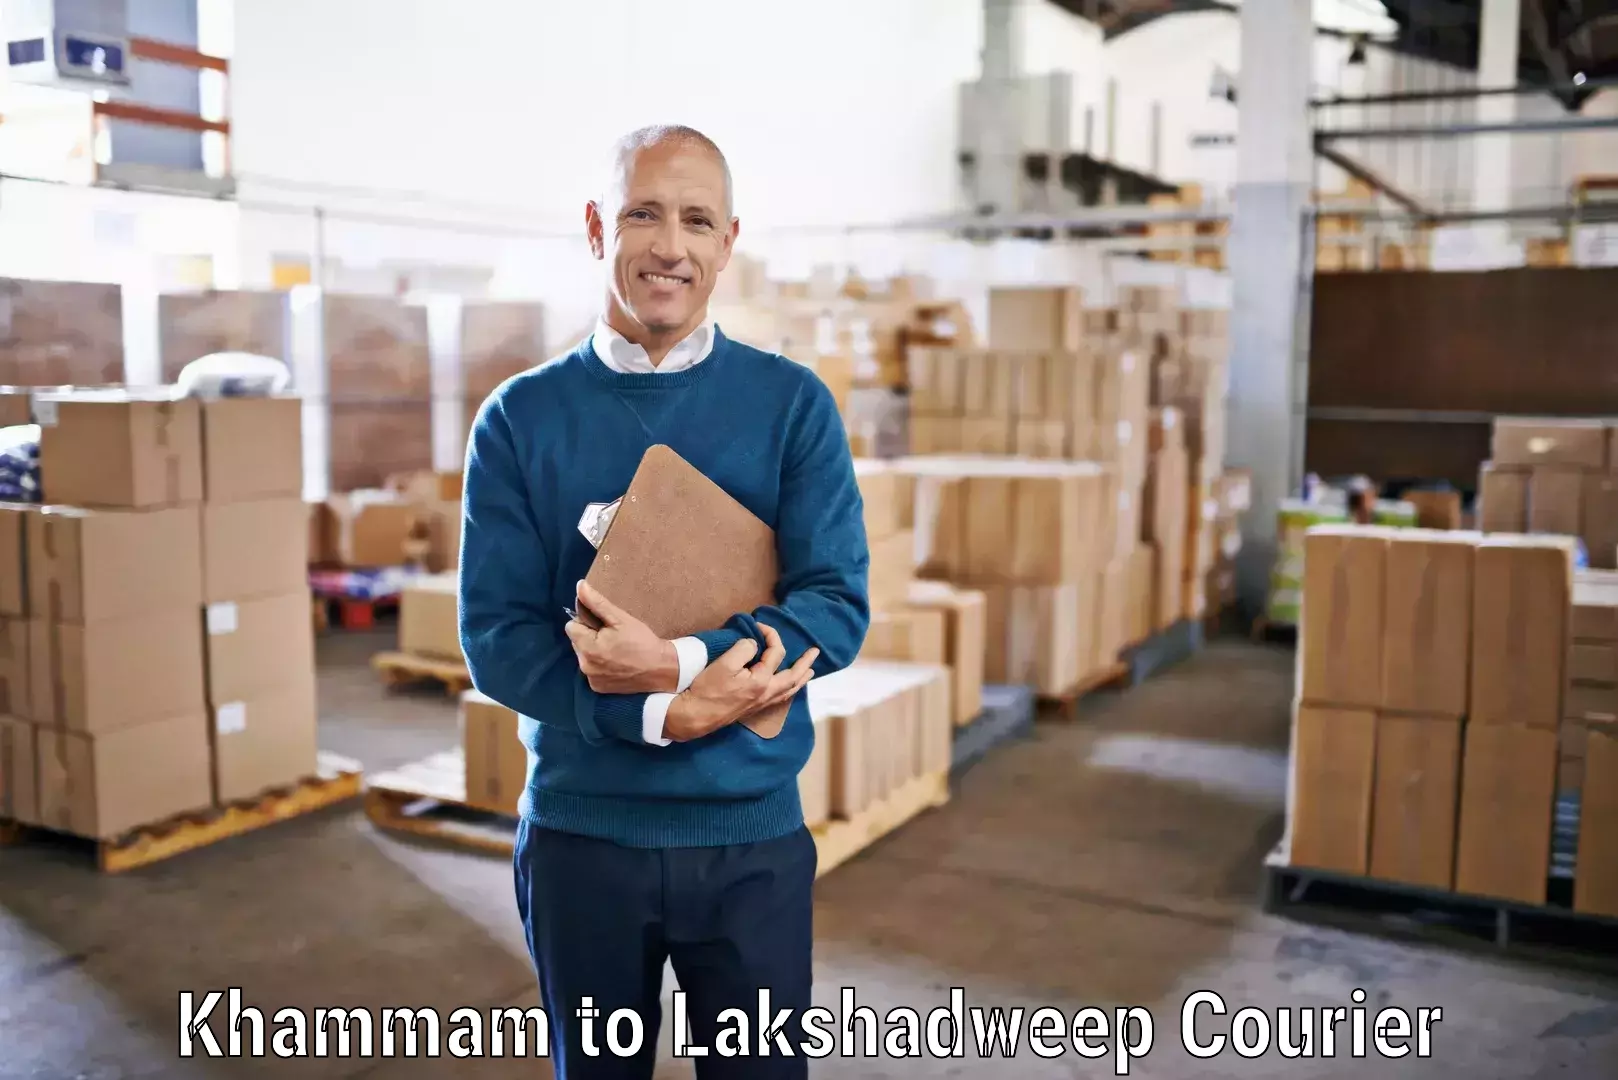 Global shipping networks Khammam to Lakshadweep